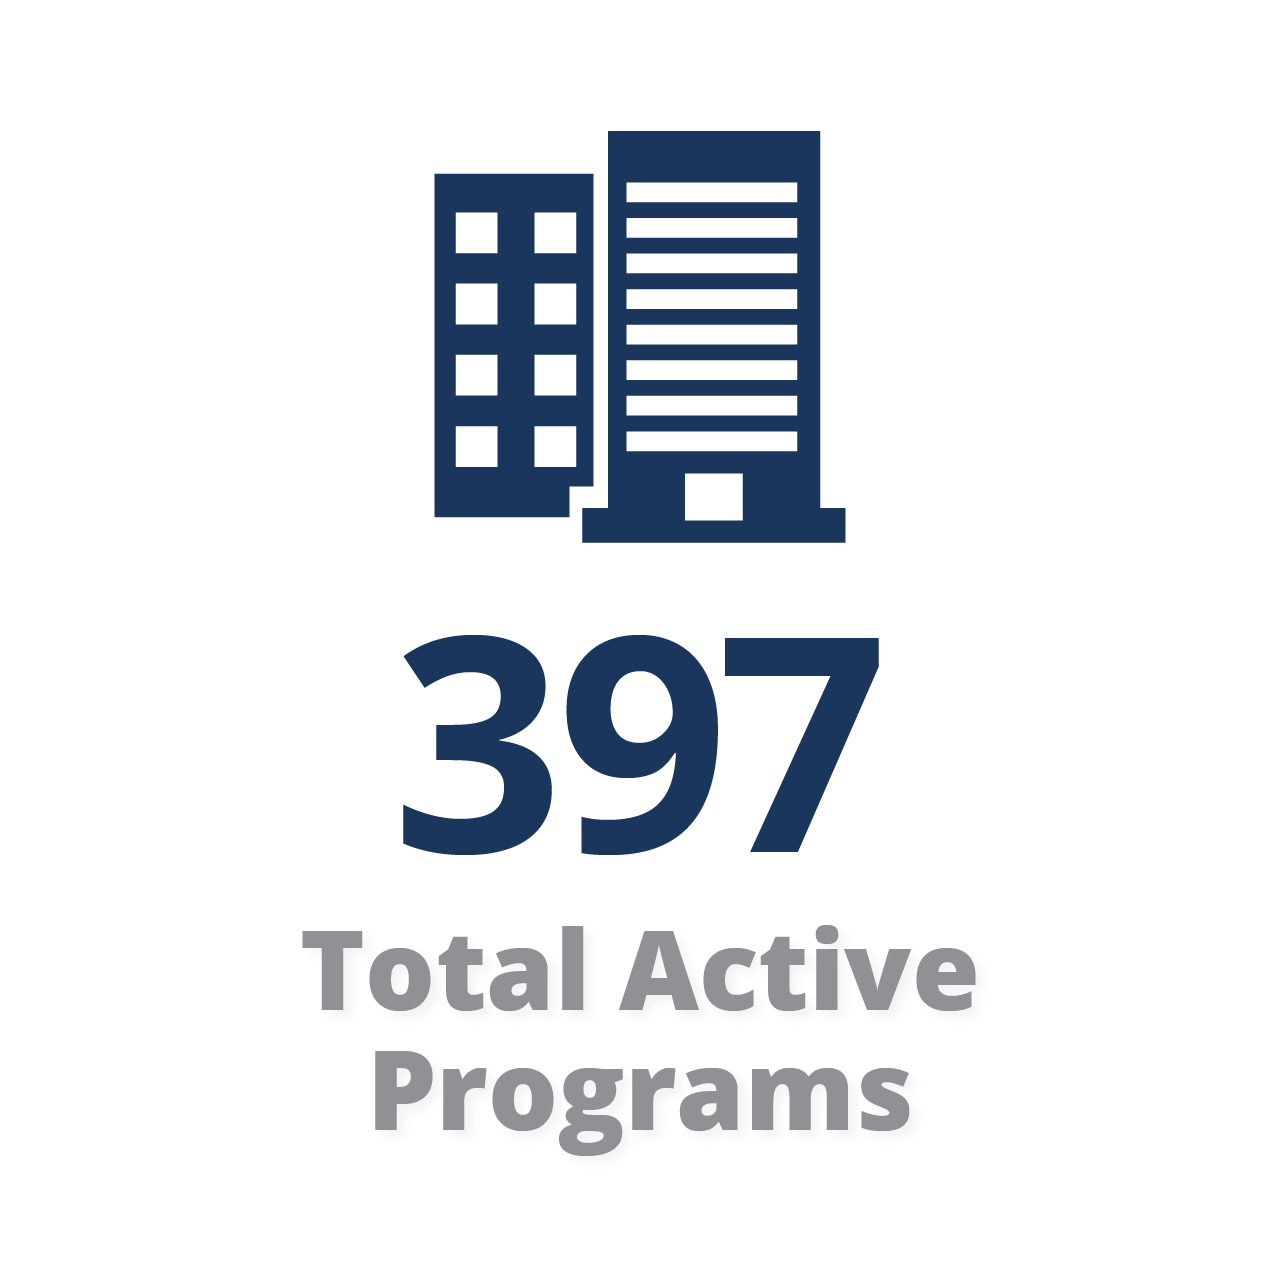  350 Total Active Programs